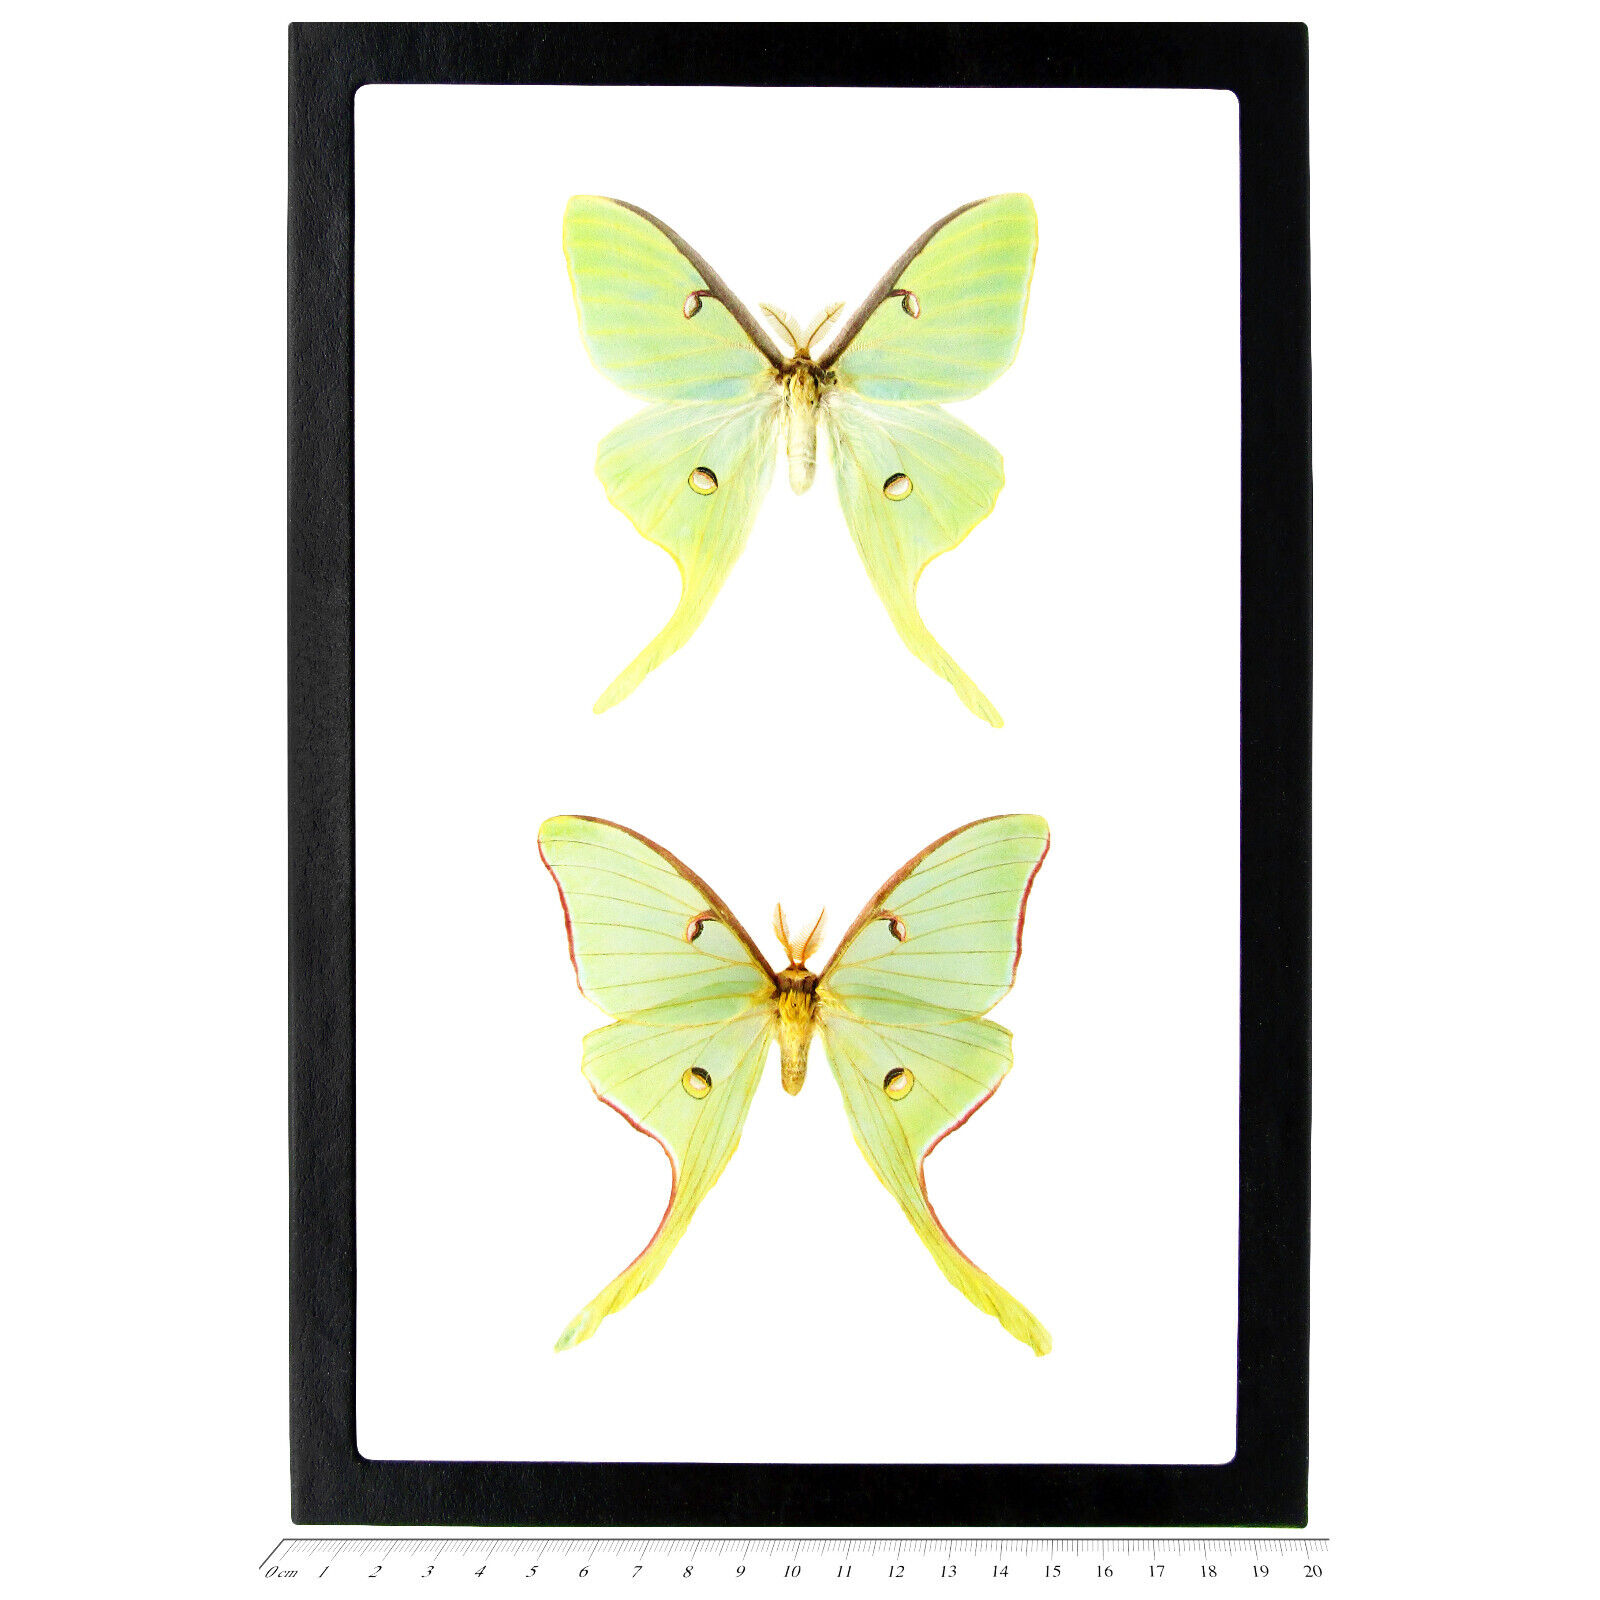 Actias luna + rubromarginata green framed saturn moths USA FRAMED